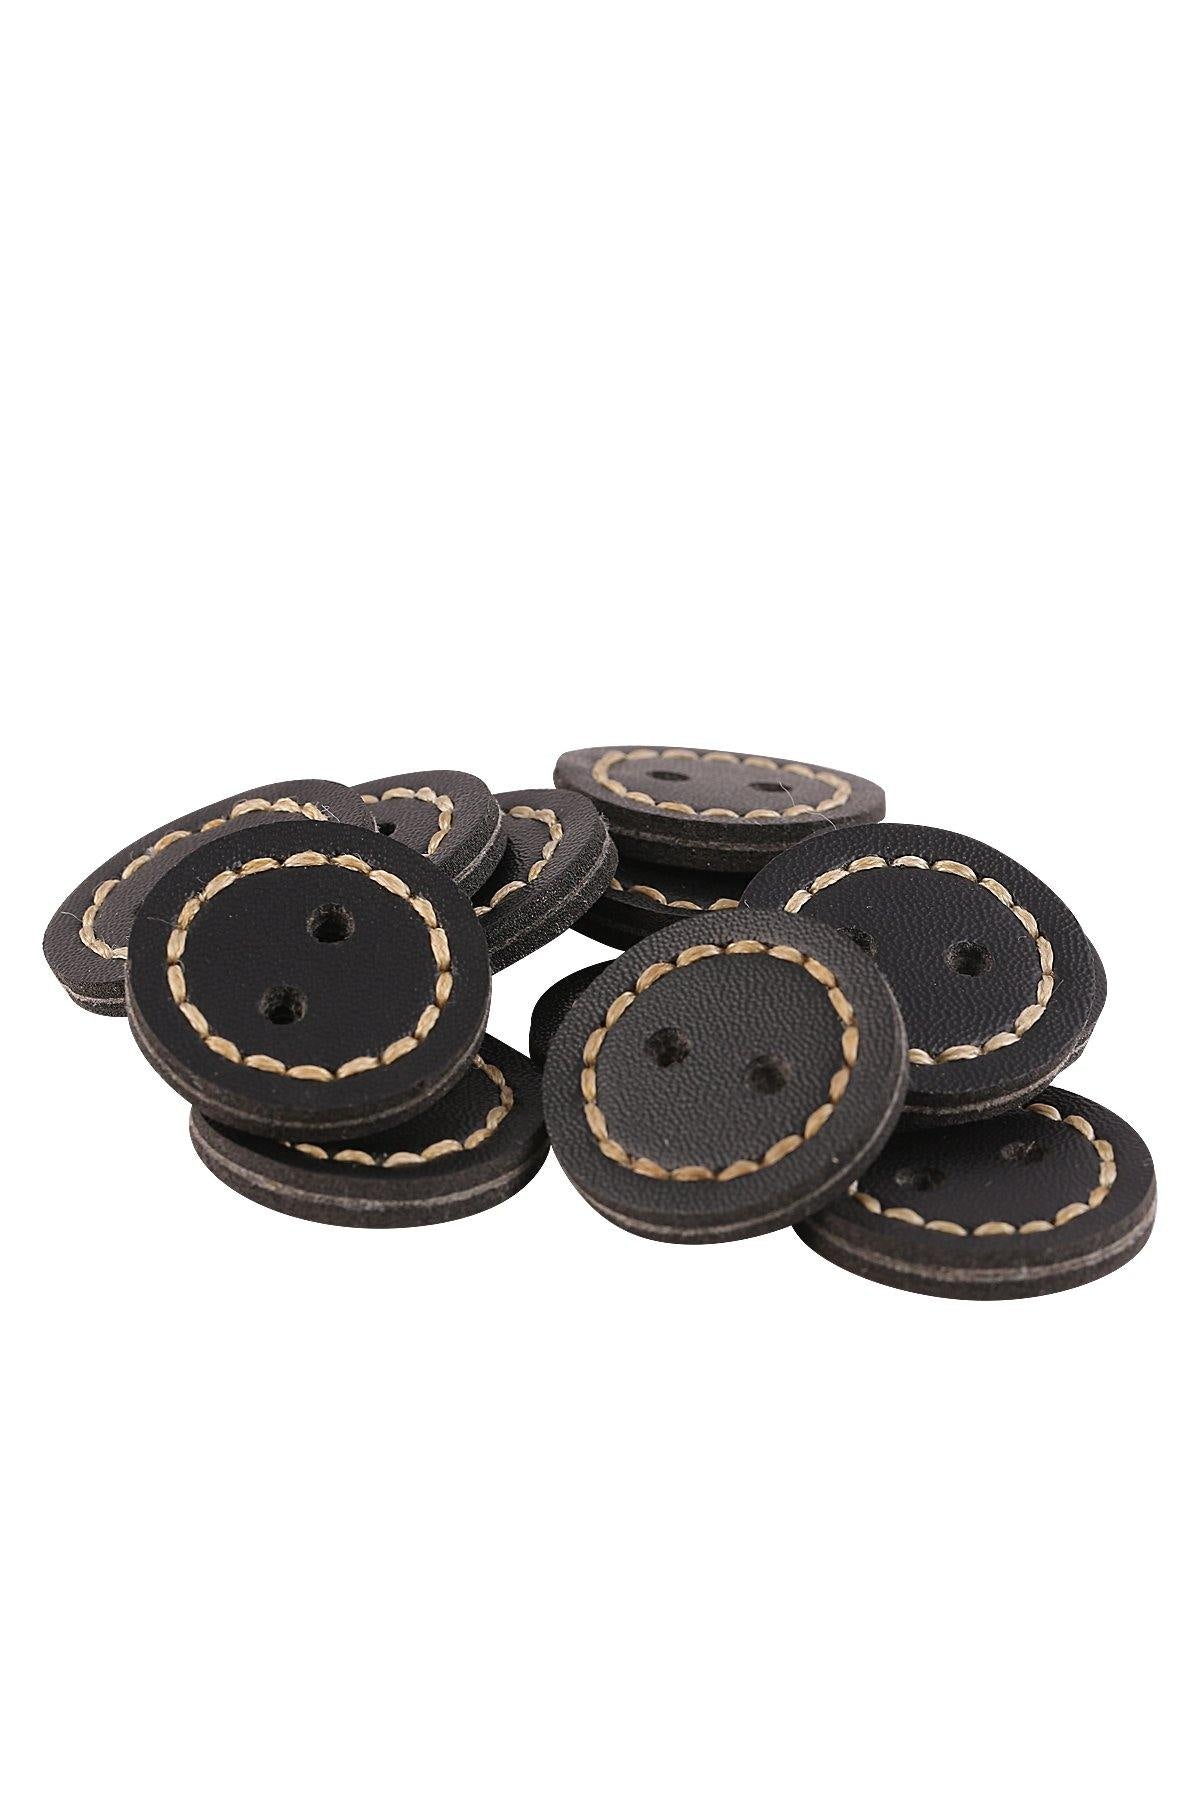 Black Round Shape 2-Hole Leather Button - Jhonea Accessories